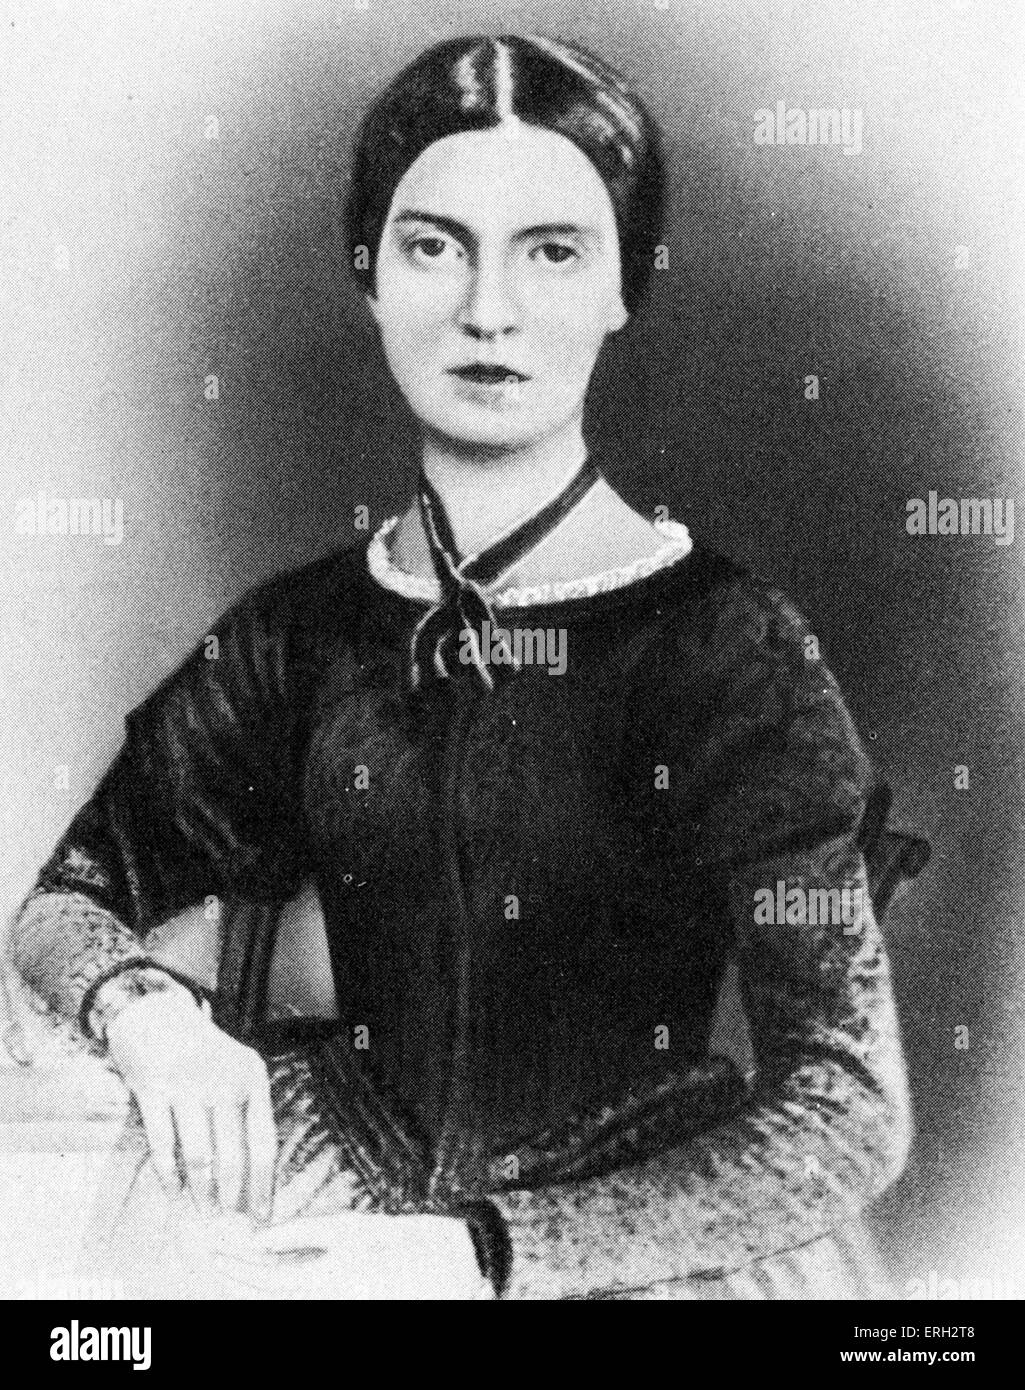 Emily Elizabeth Dickinson c. 1846, American poet. 10 December 1830 – 15 May 1886. Stock Photo